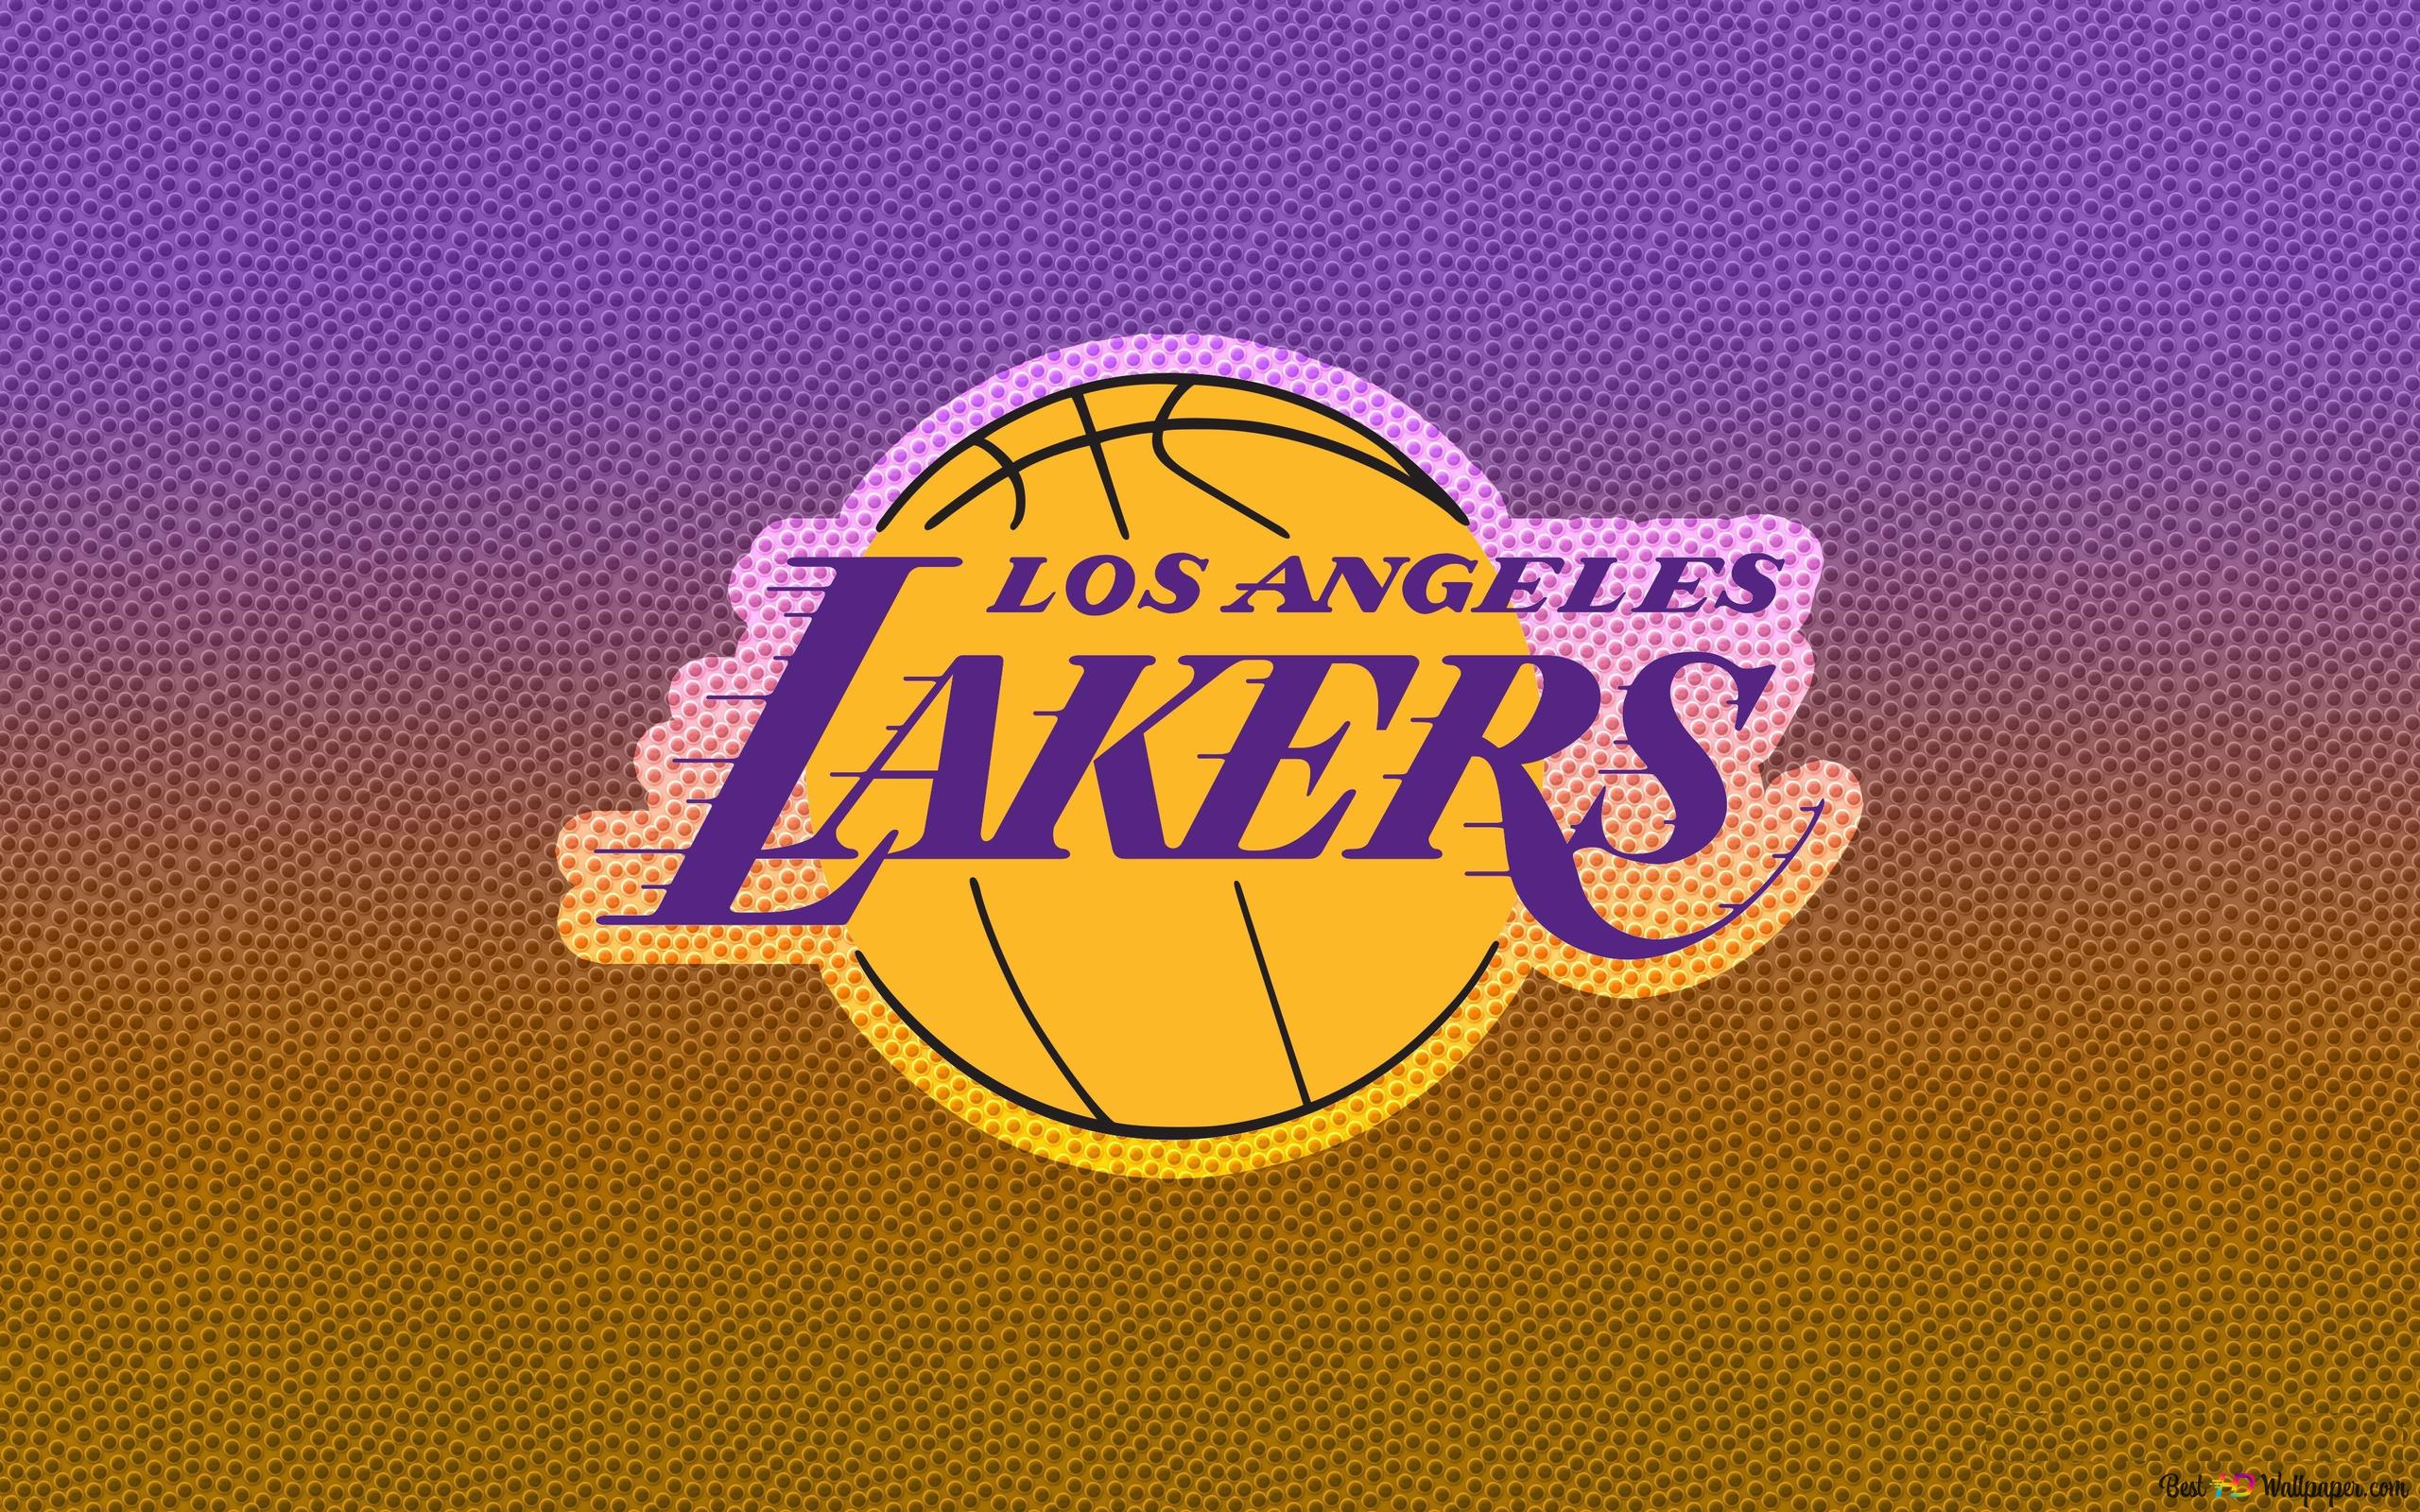 Los Angeles Lakers NBA 4K wallpaper download